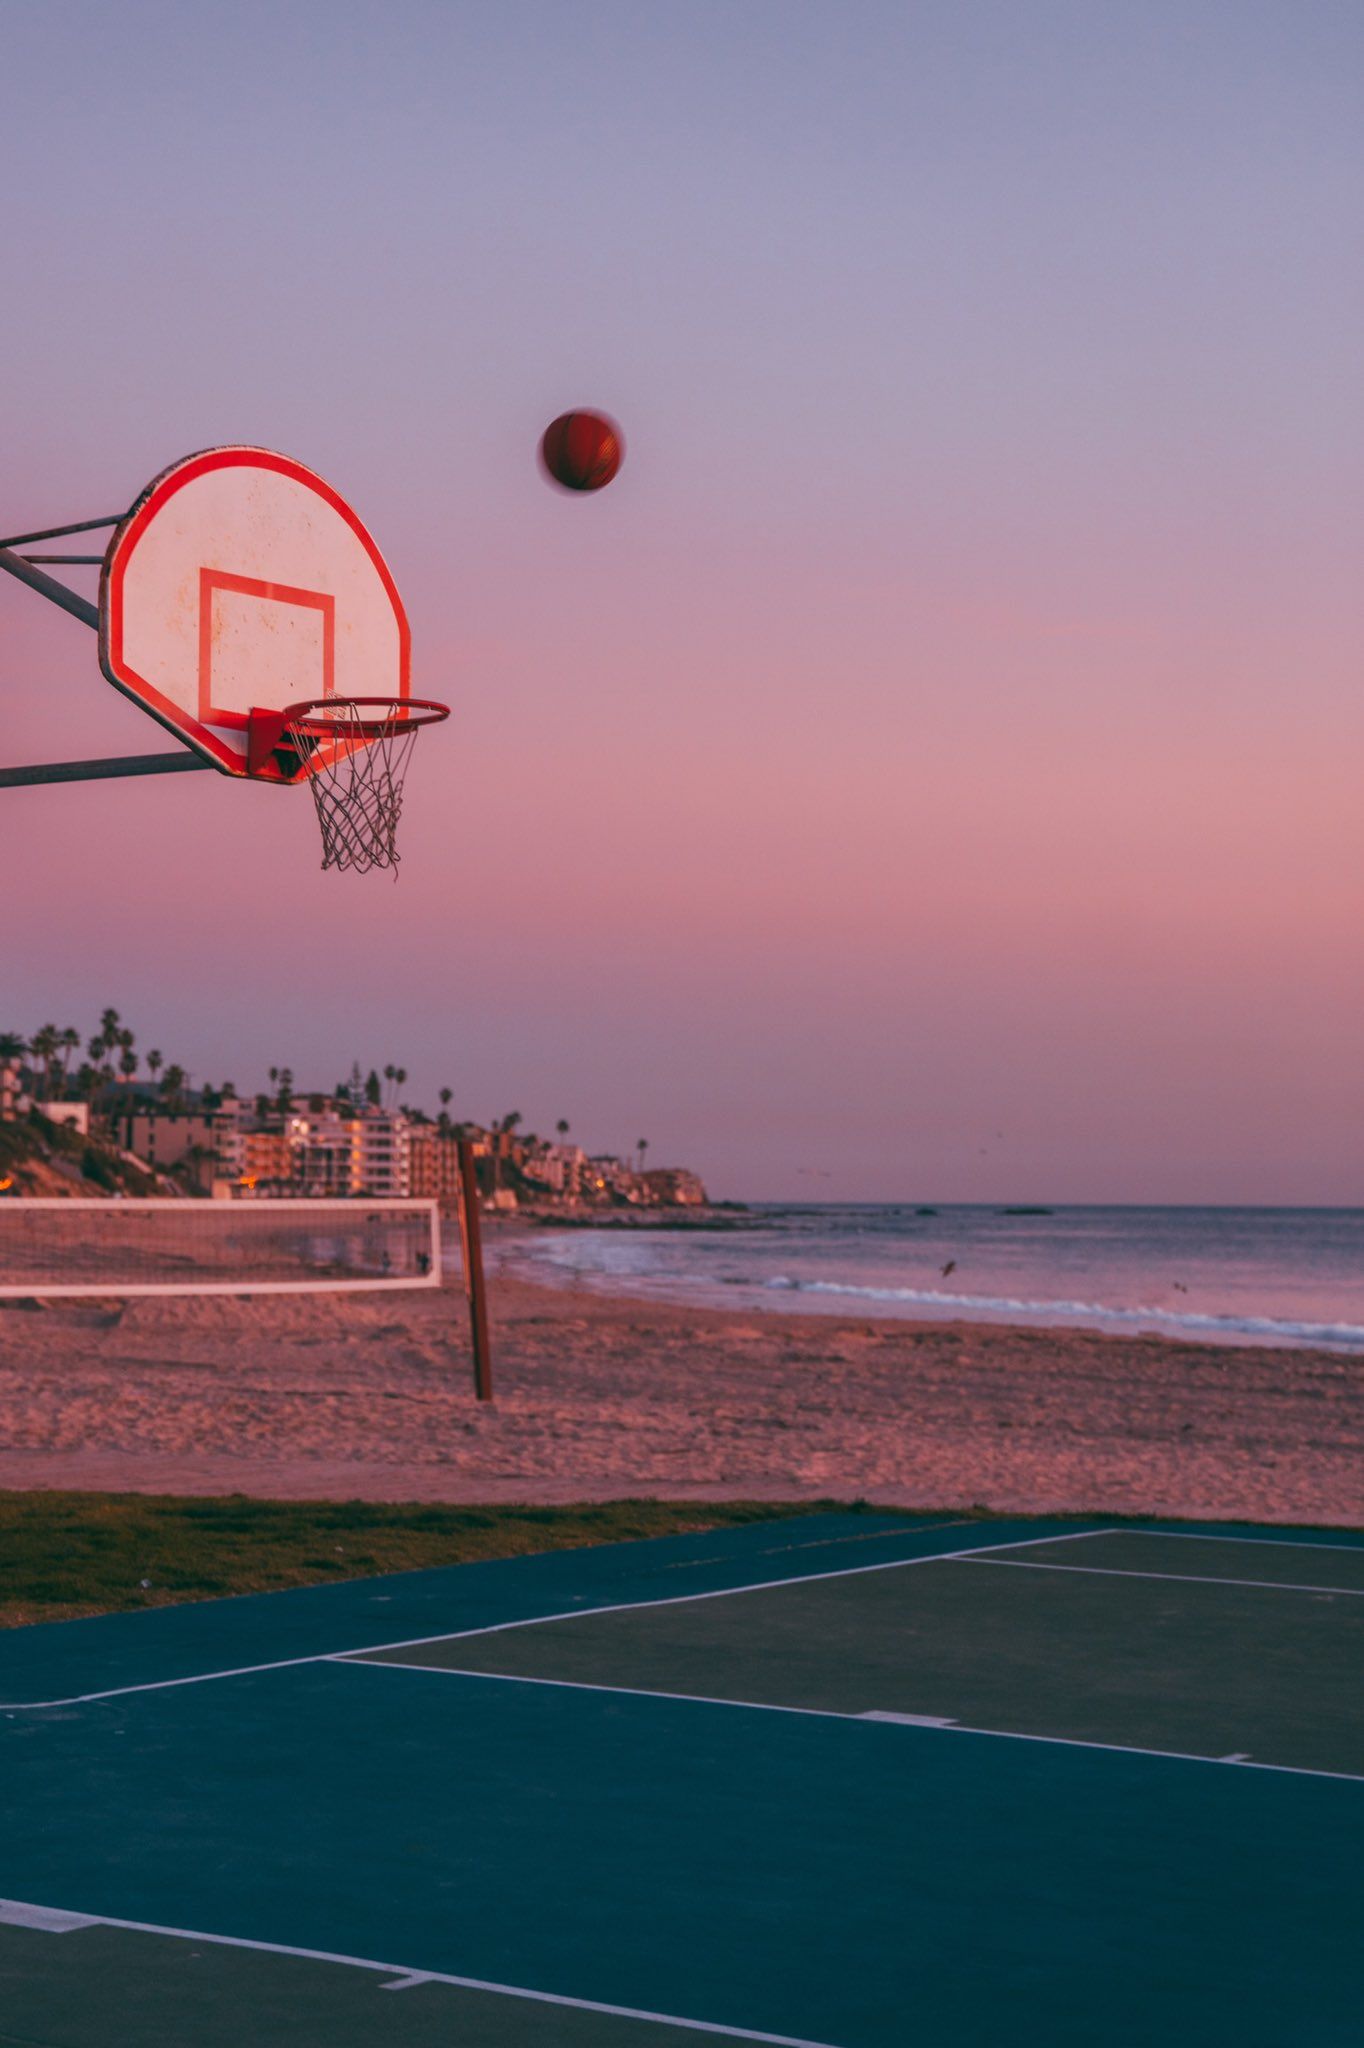 A basketball hoop on the beach with an ocean view - Basketball